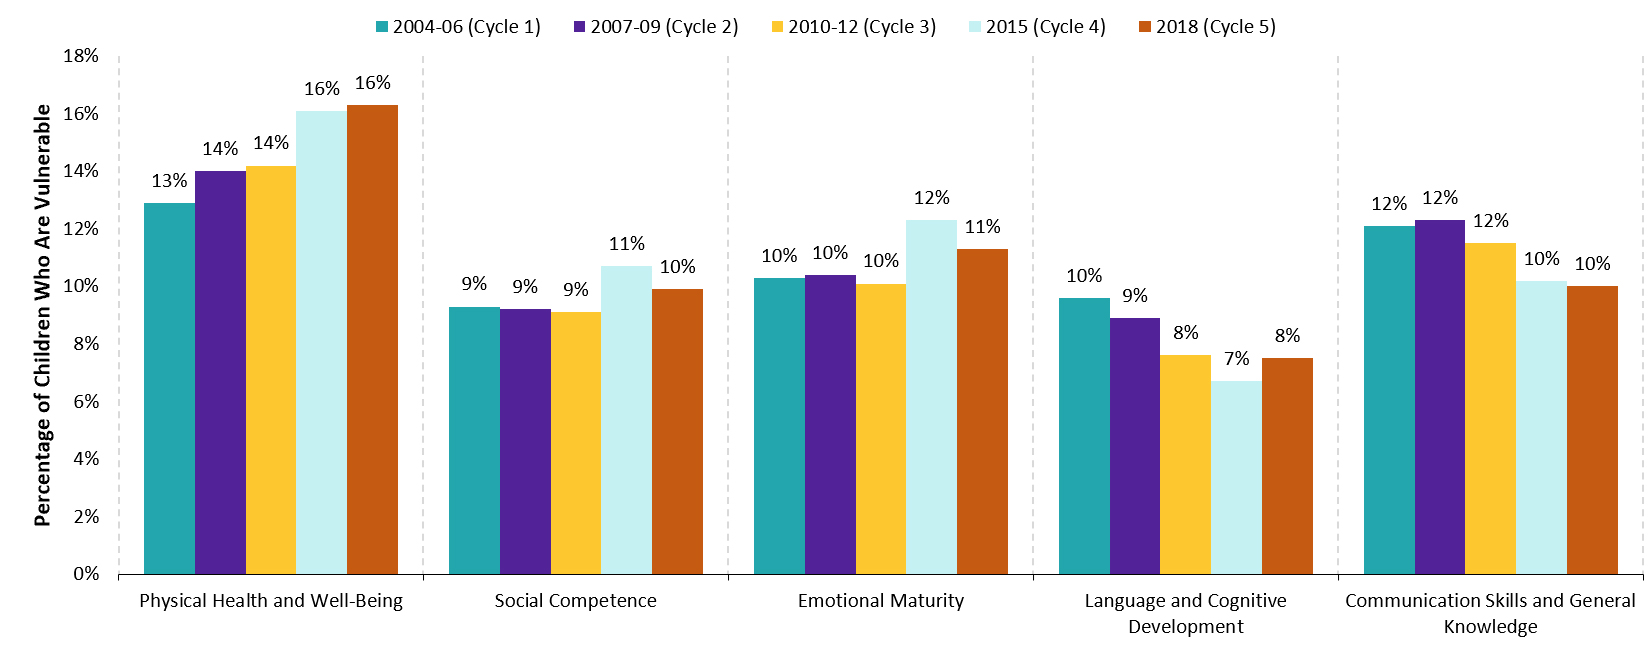 Percentage of vulnerable children by EDI domain, 2004-18